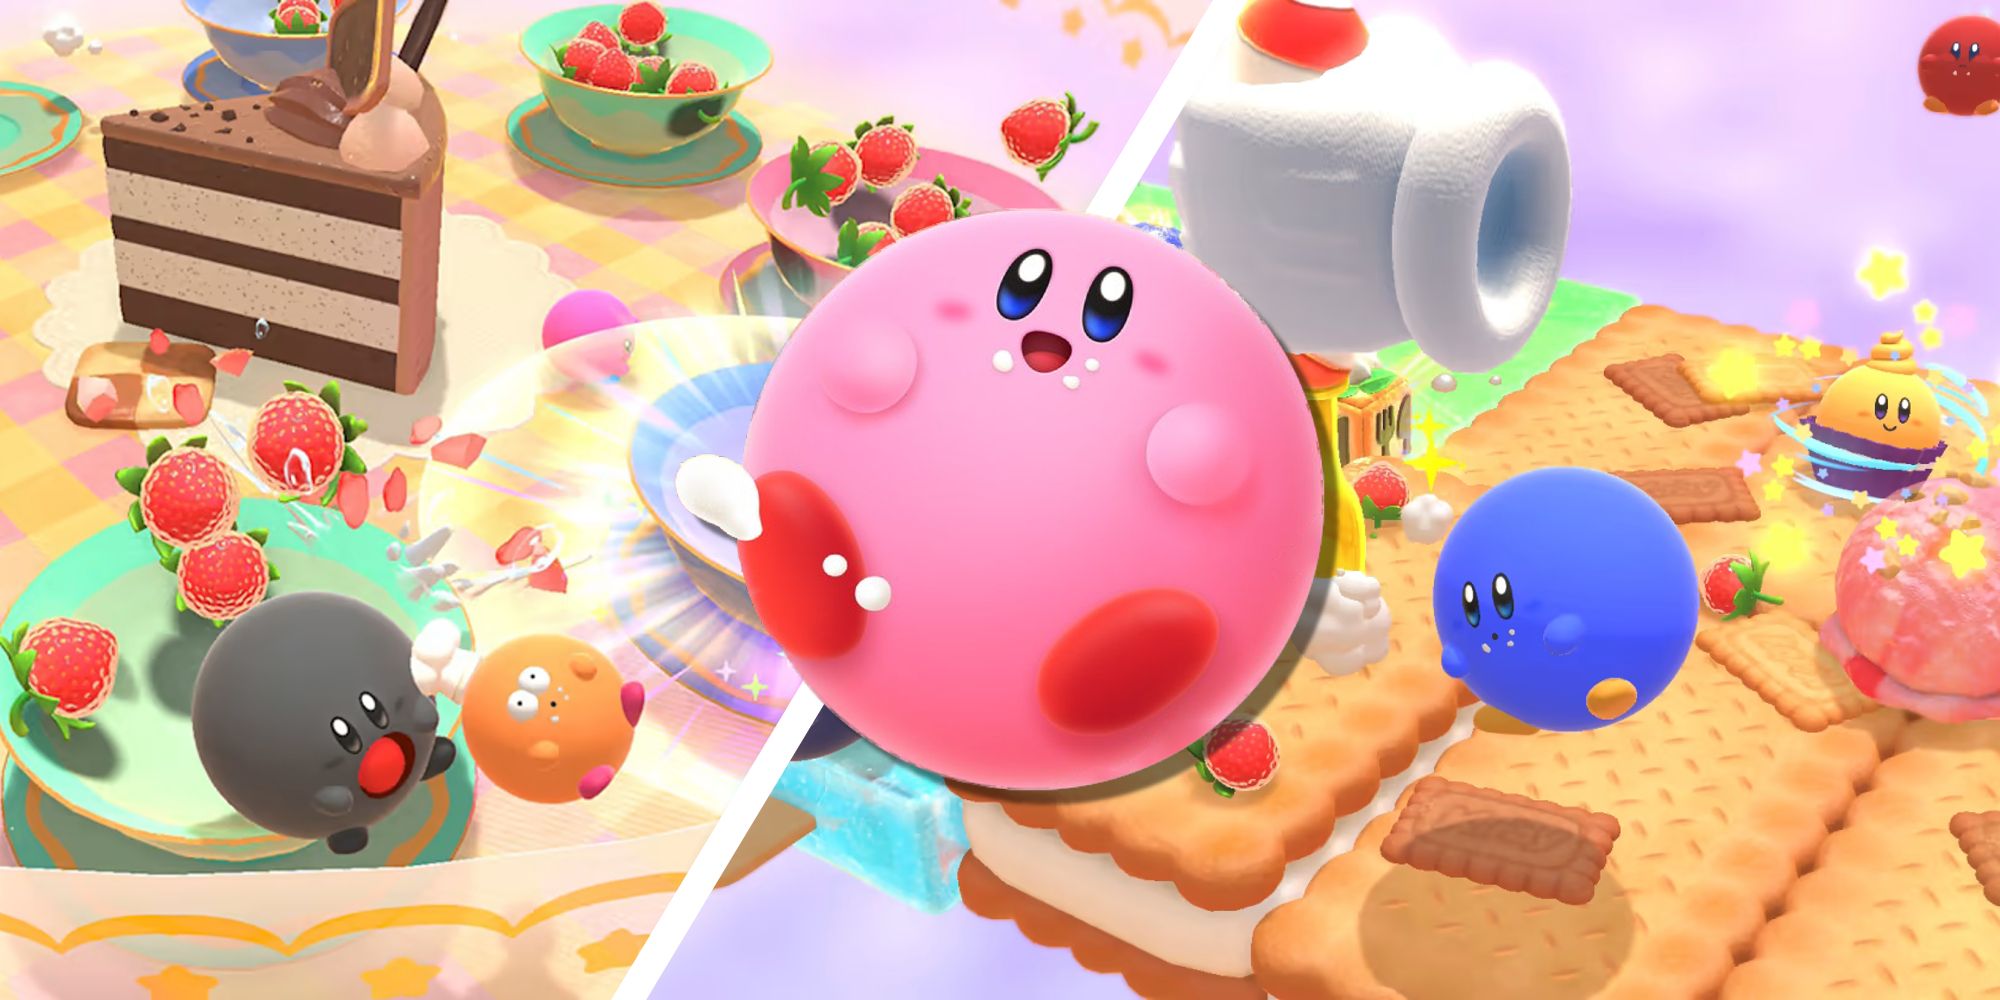 Kirby Dream Buffet Feature Kirbys Having A Fun Time